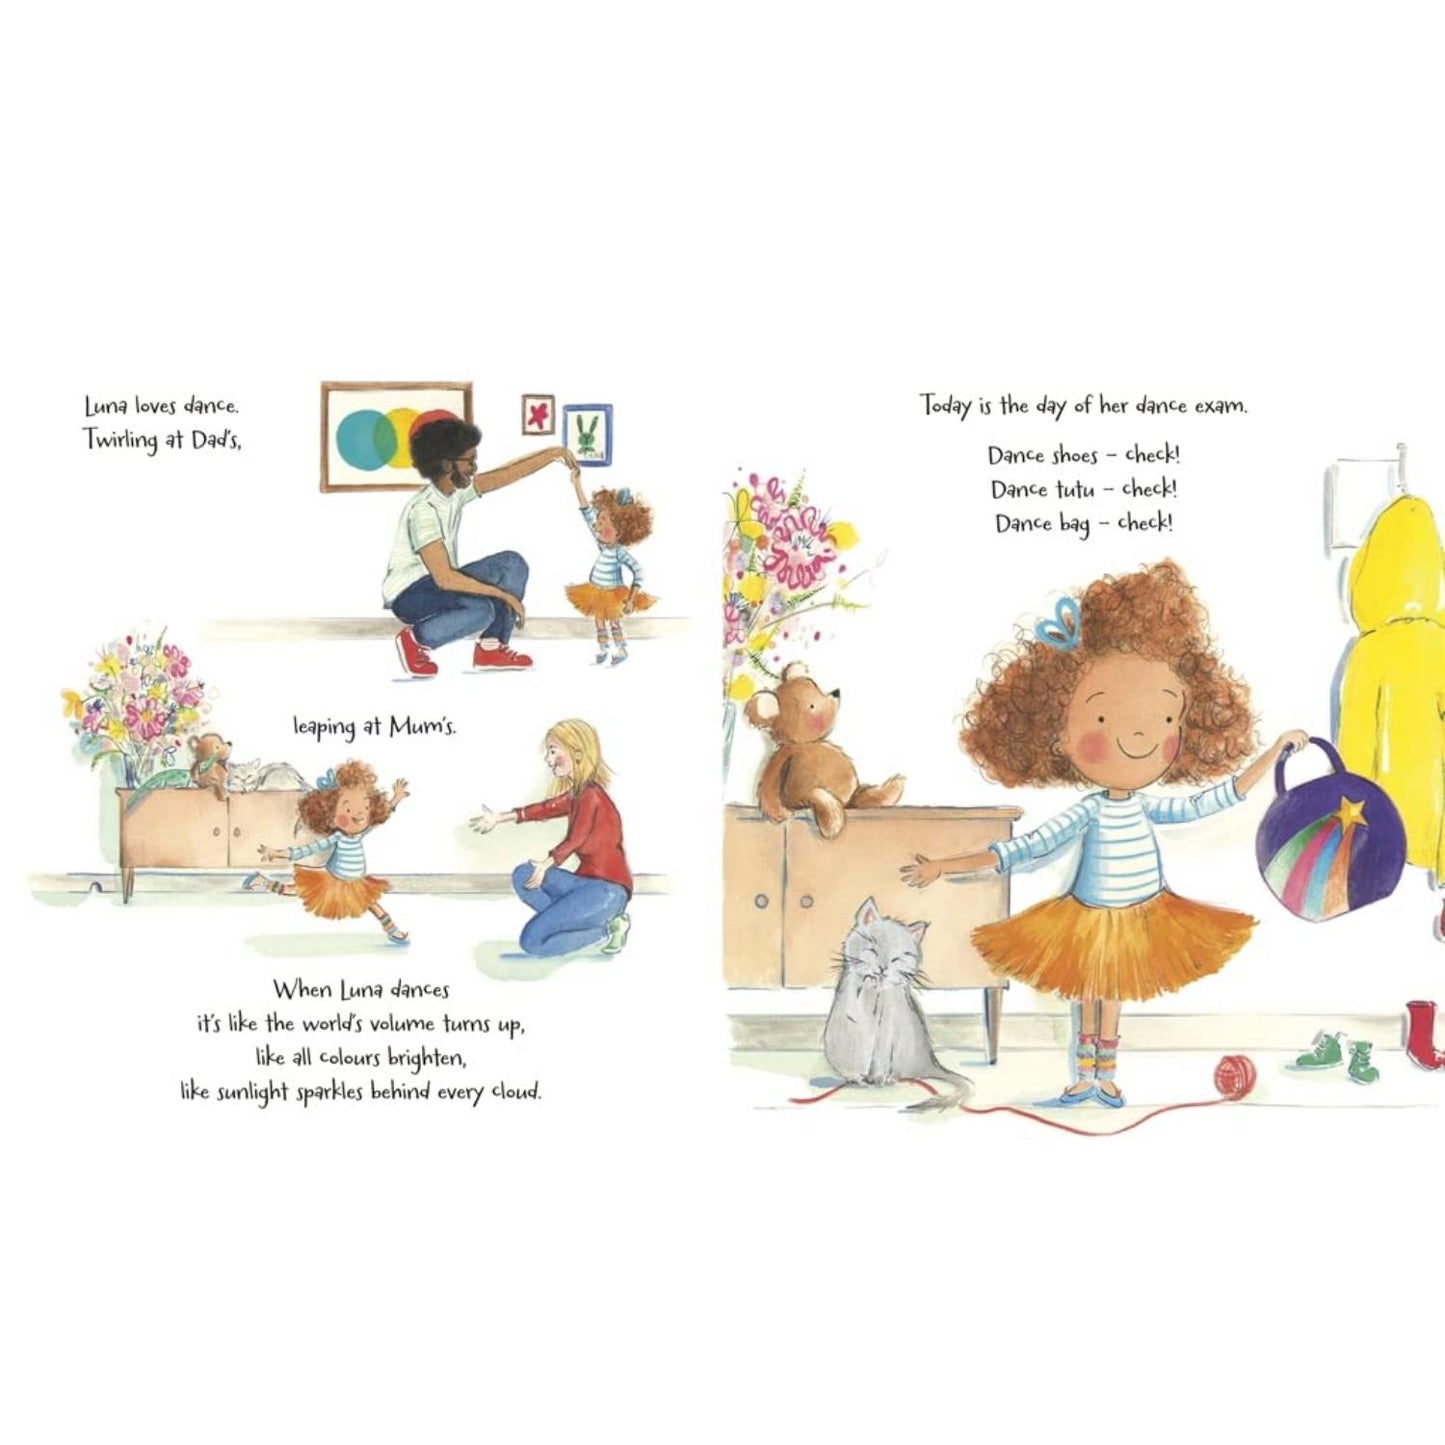 Luna Loves Dance | Hardcover | Children's Book on Dance